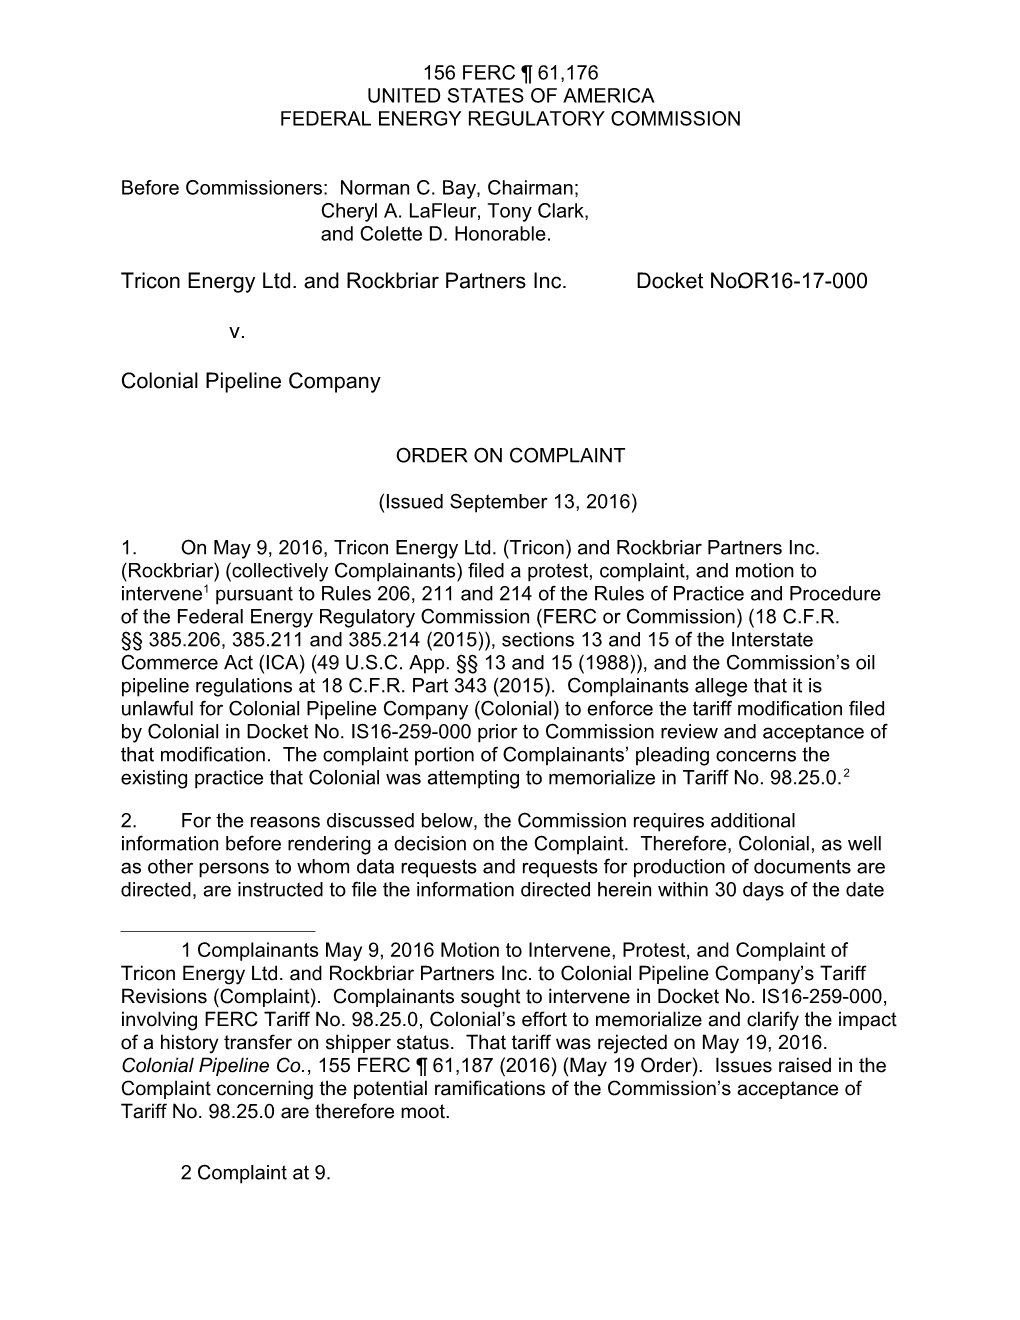 Federal Energy Regulatory Commission s5